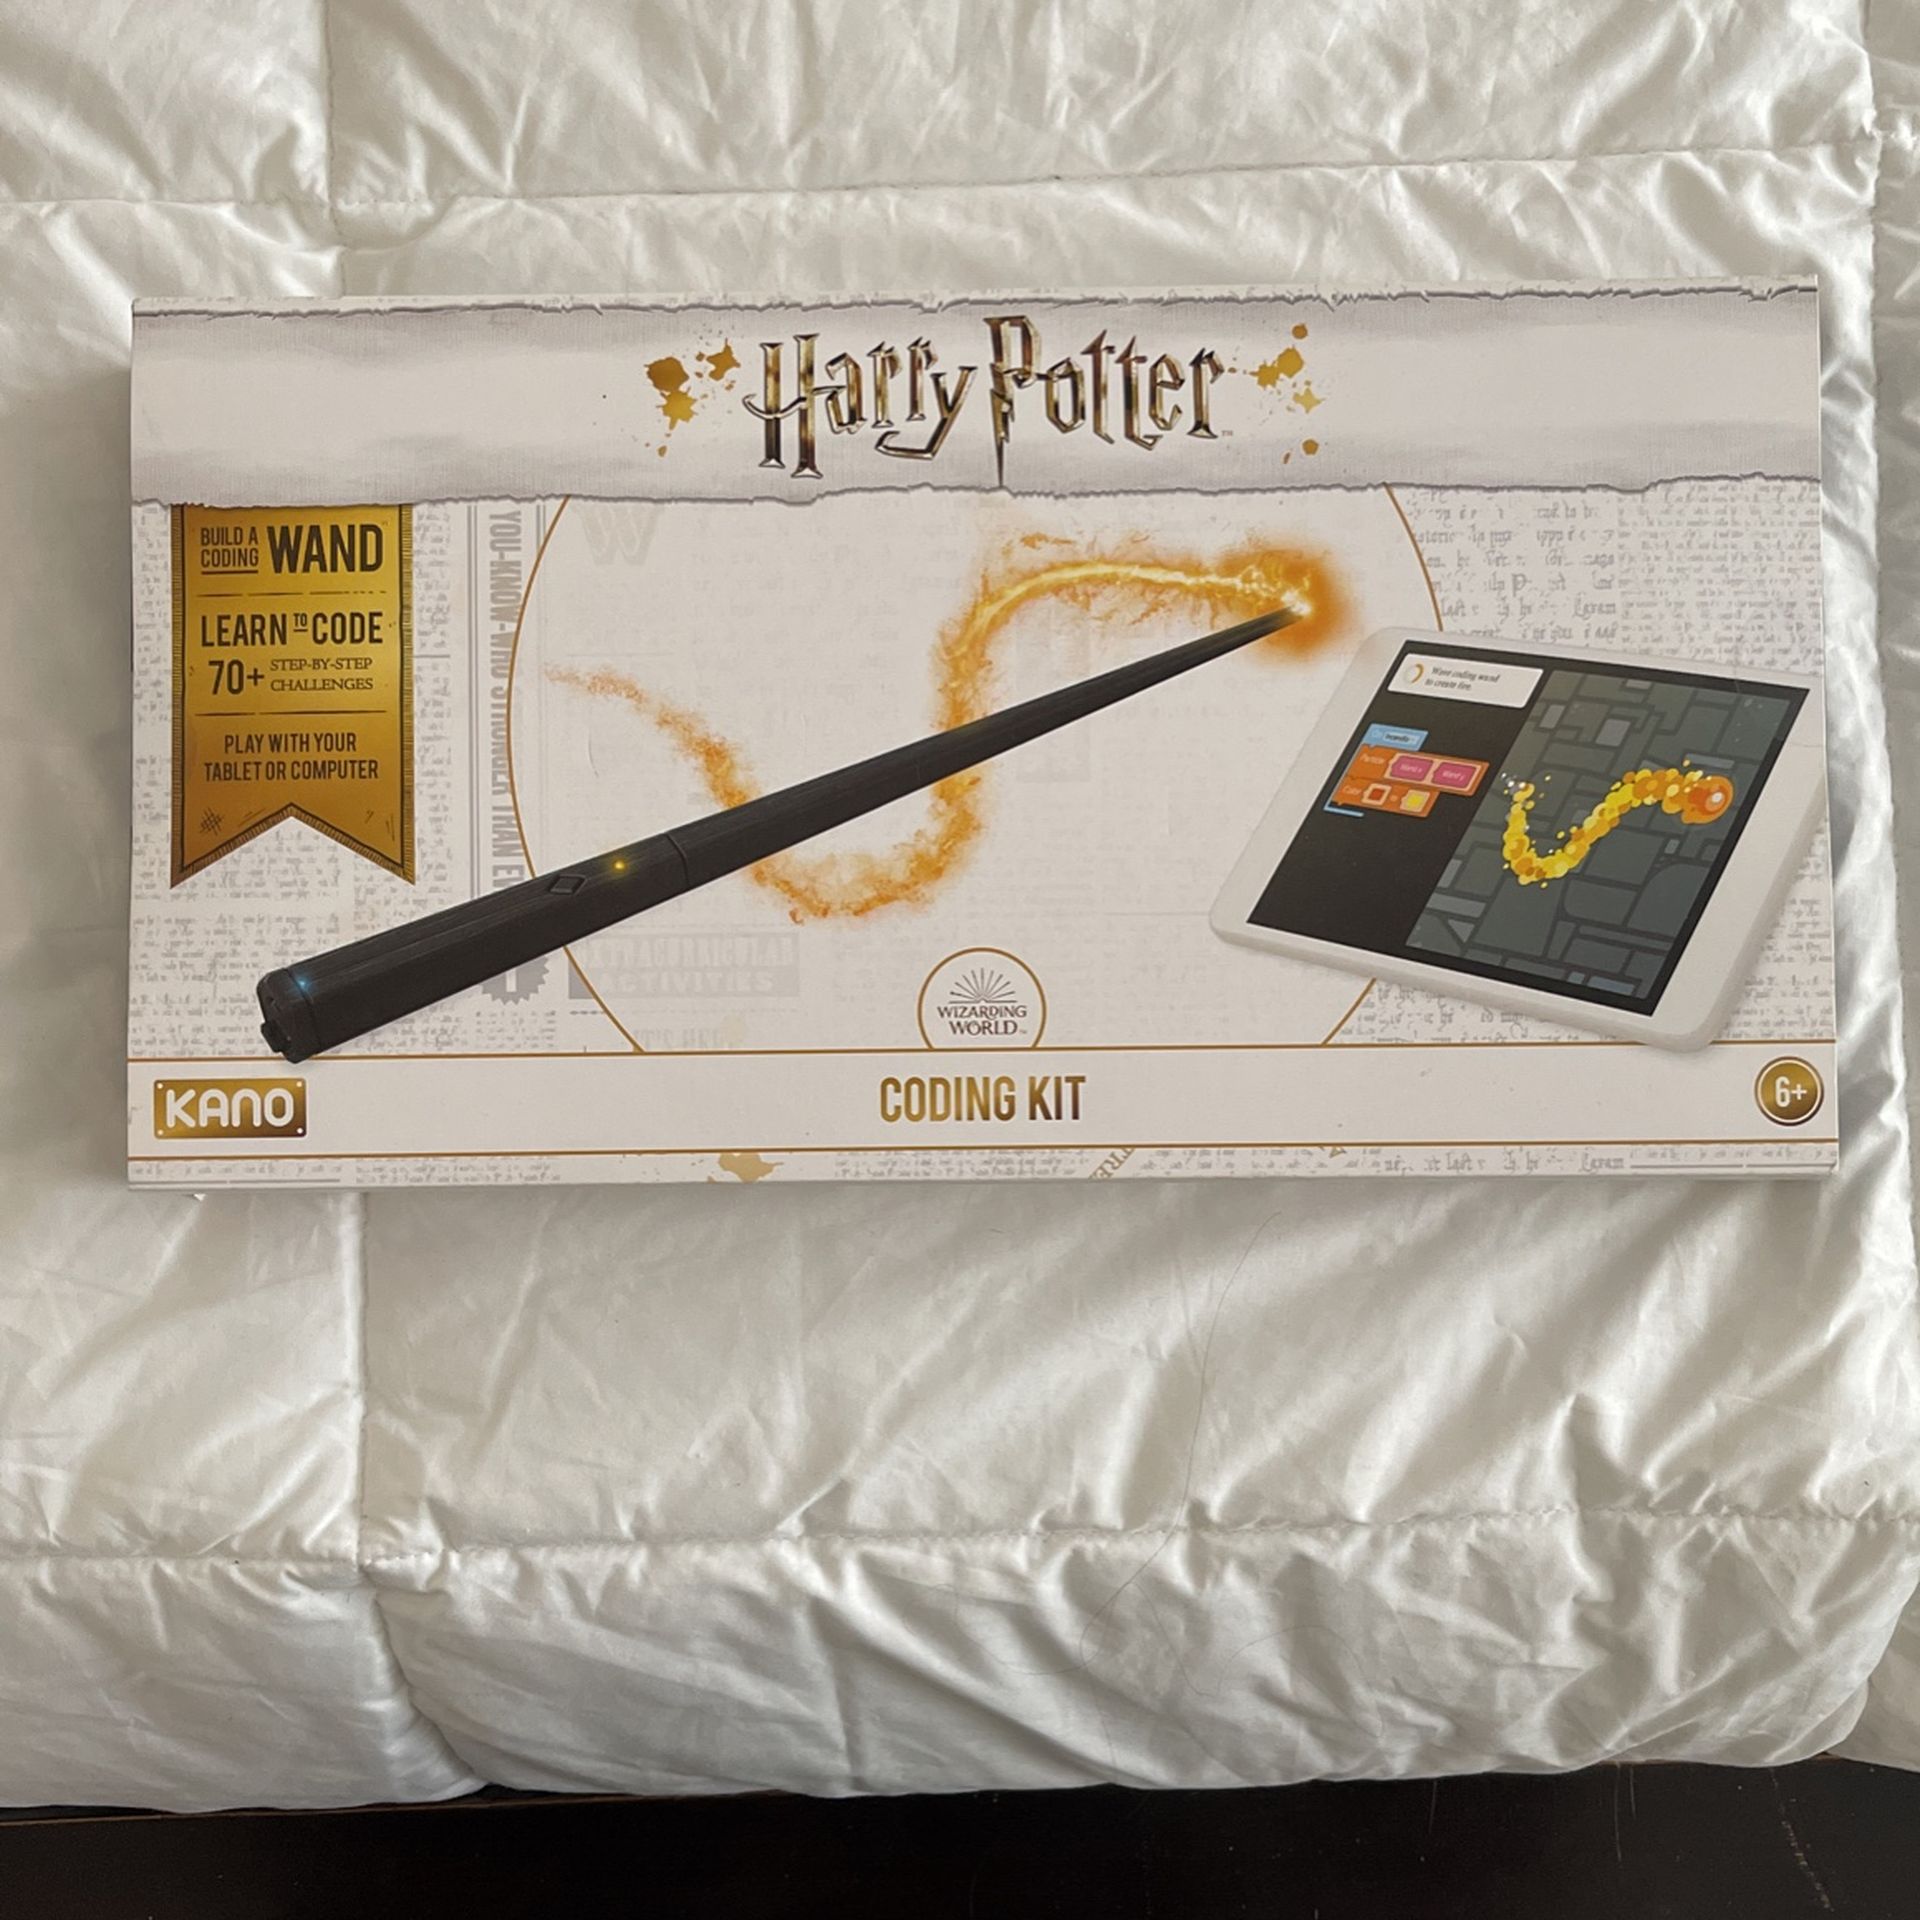 Harry Potter Coding Kit - Build A Coding Wand